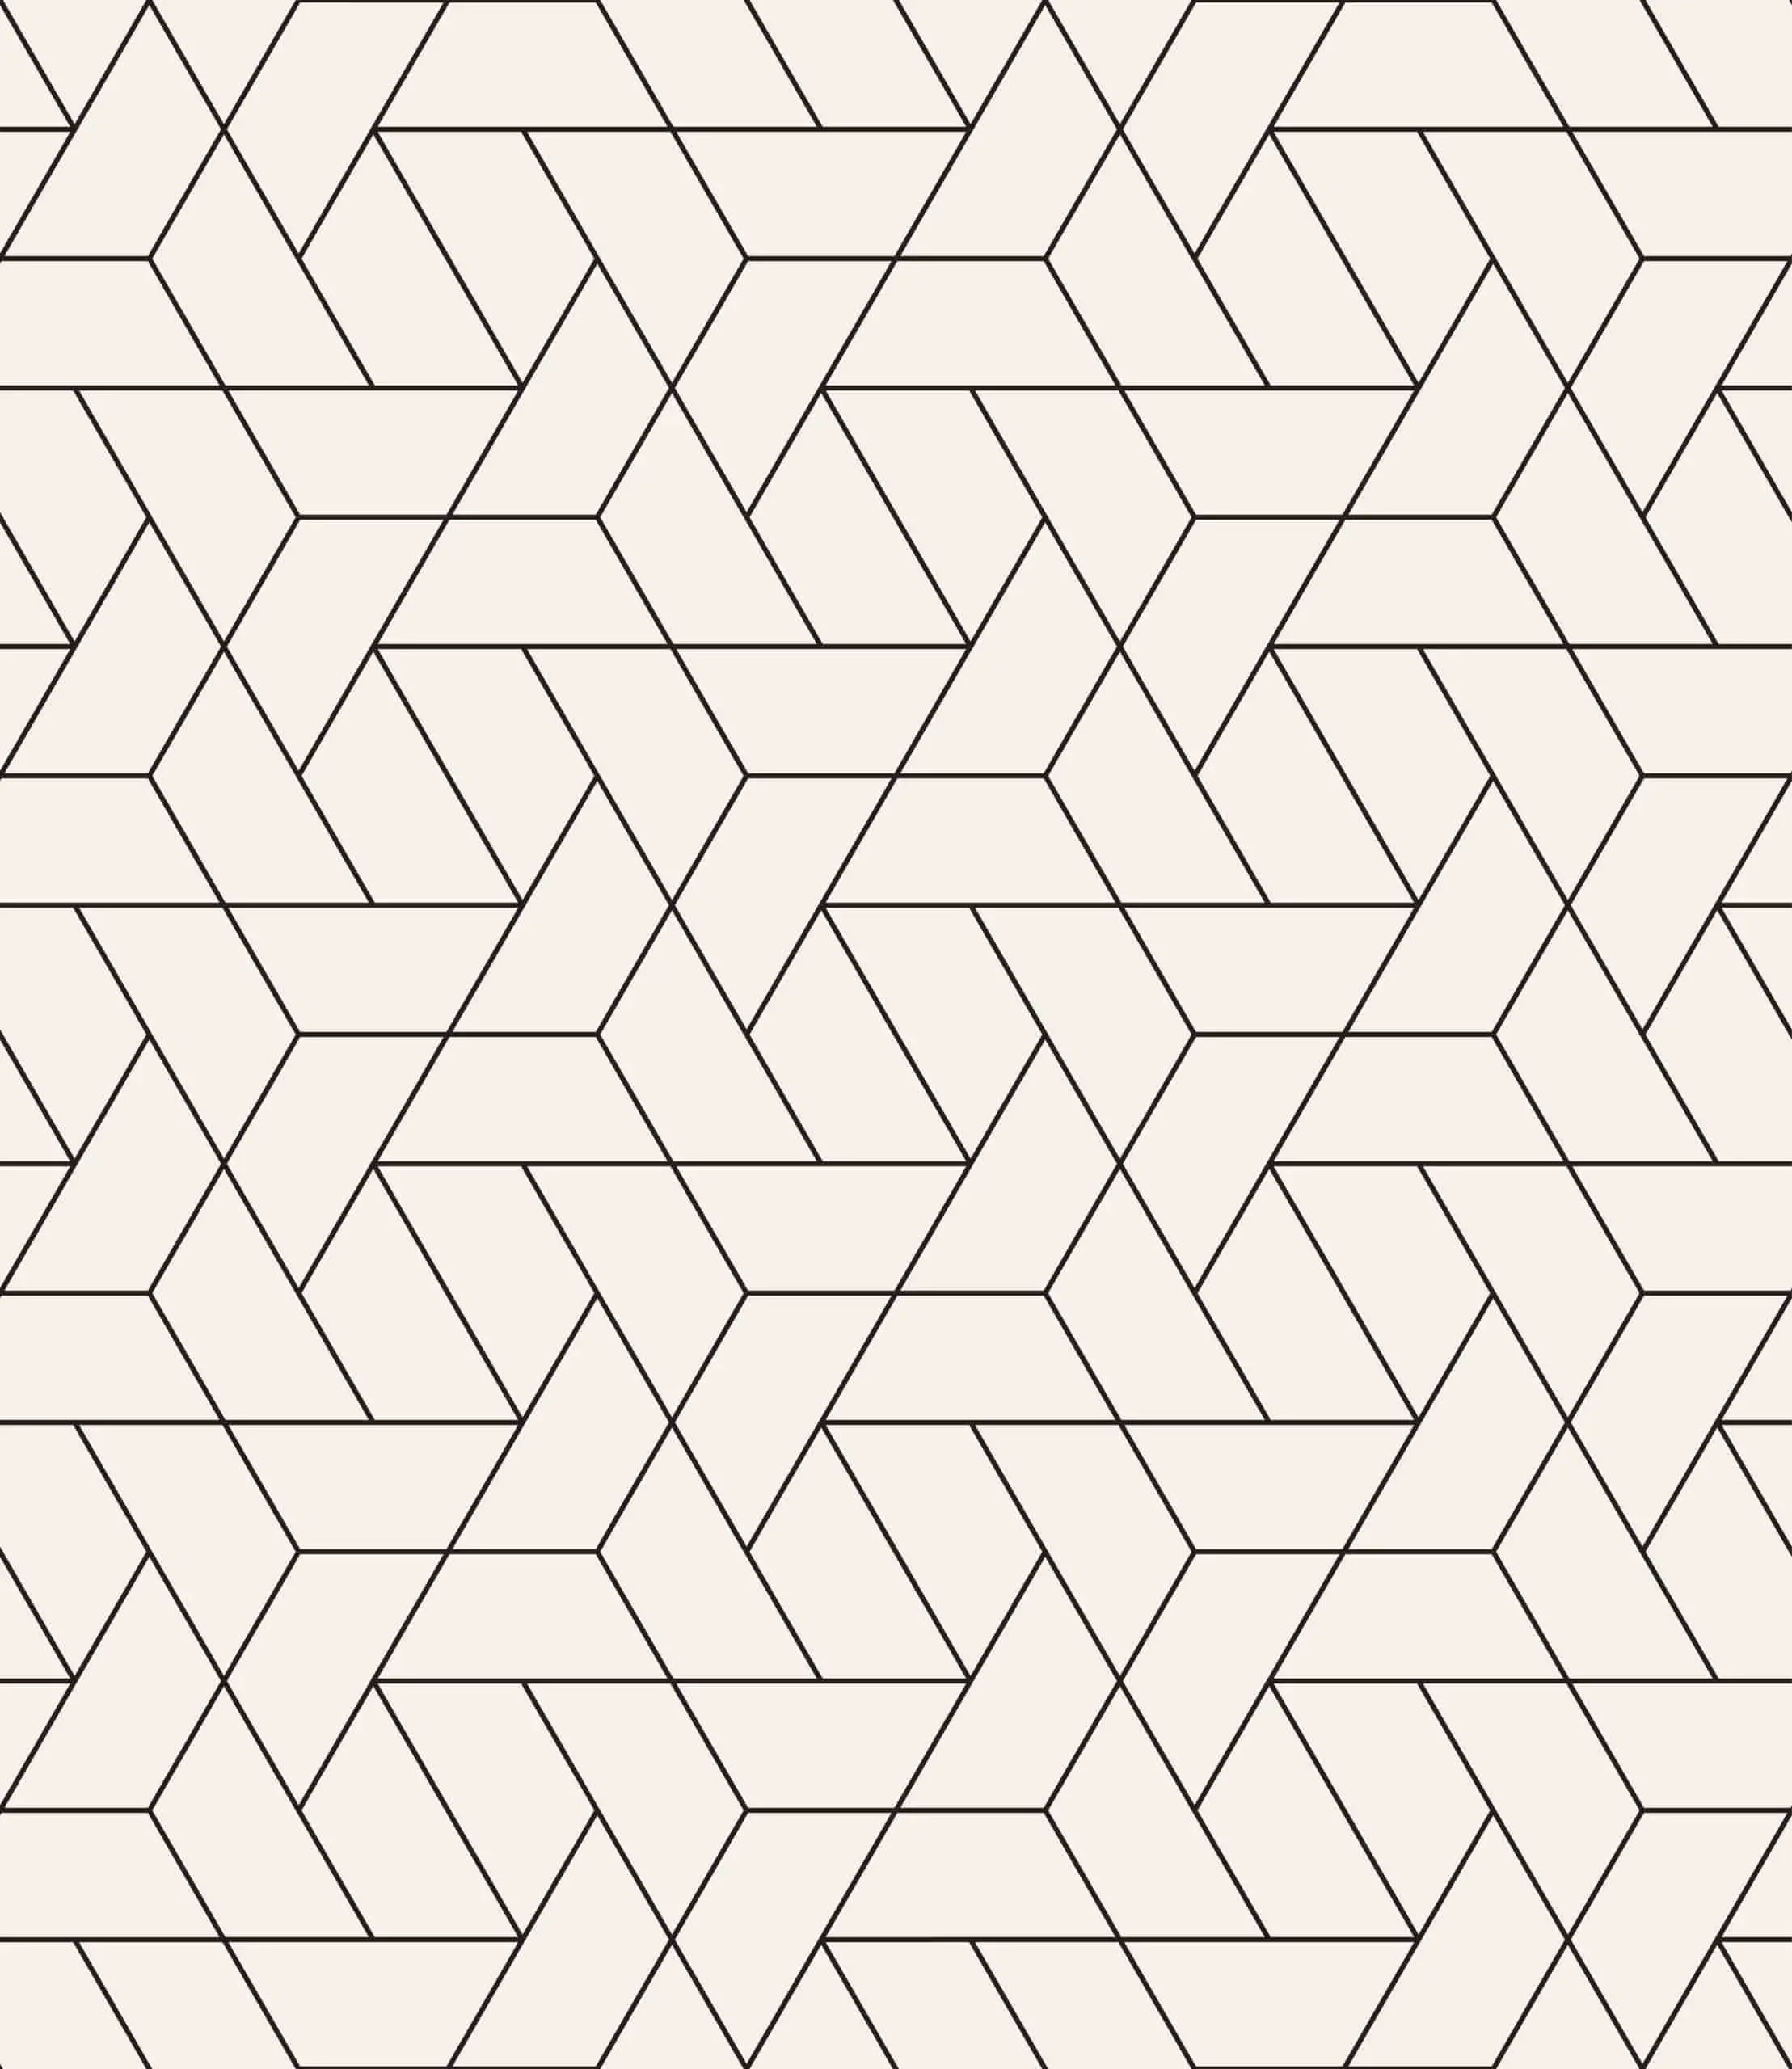 Graphic Patterned Tiles kitchen floor tile ideas